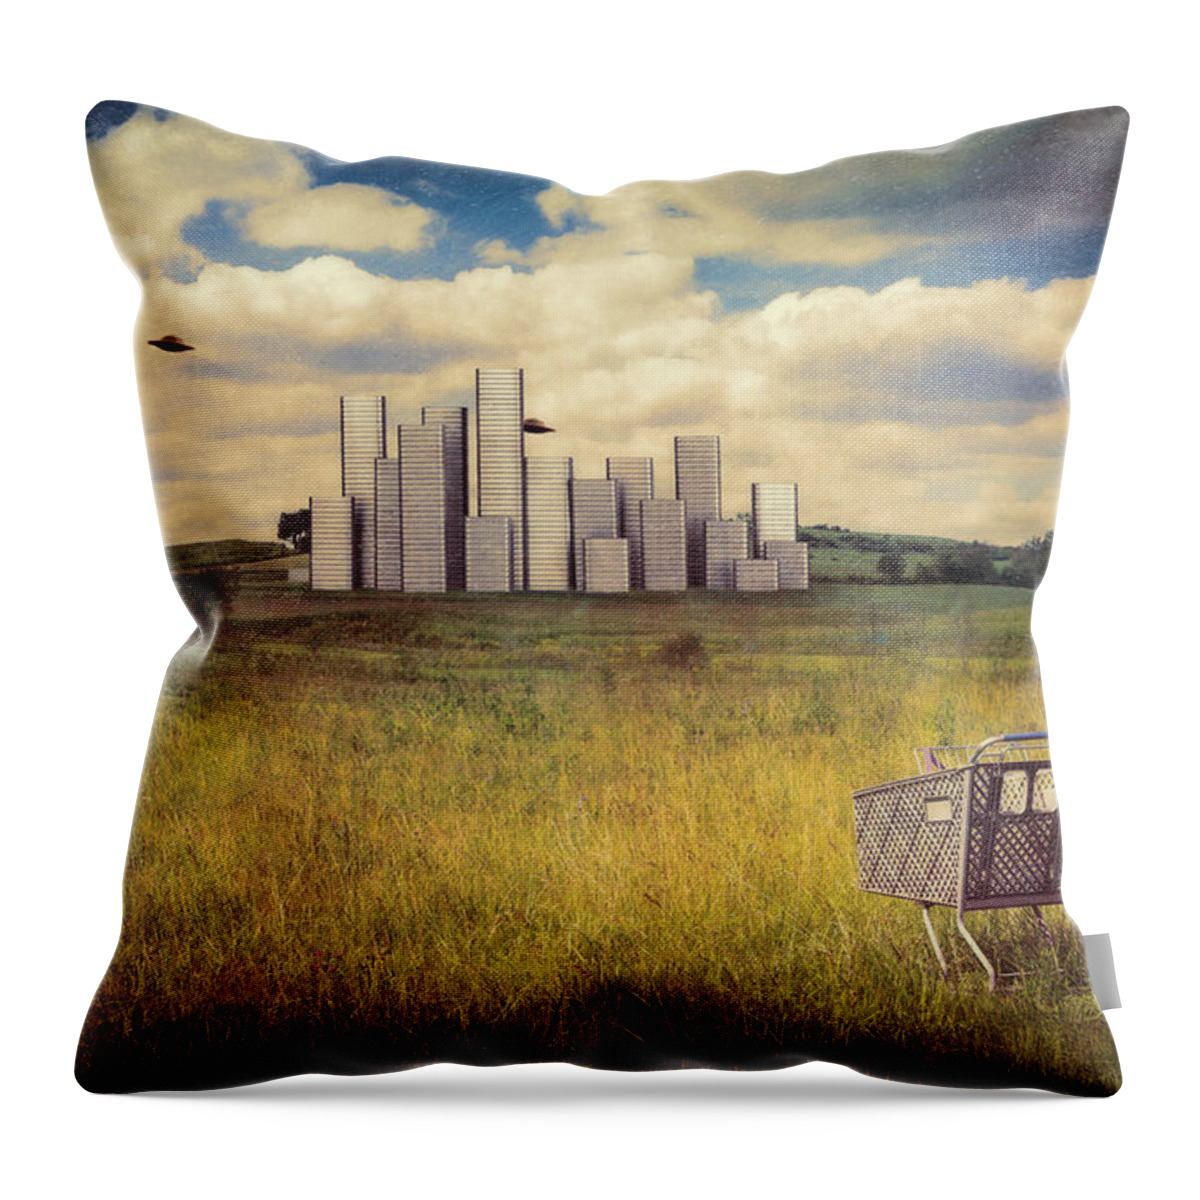 Landscape Throw Pillow featuring the photograph Metropolis by Tom Mc Nemar